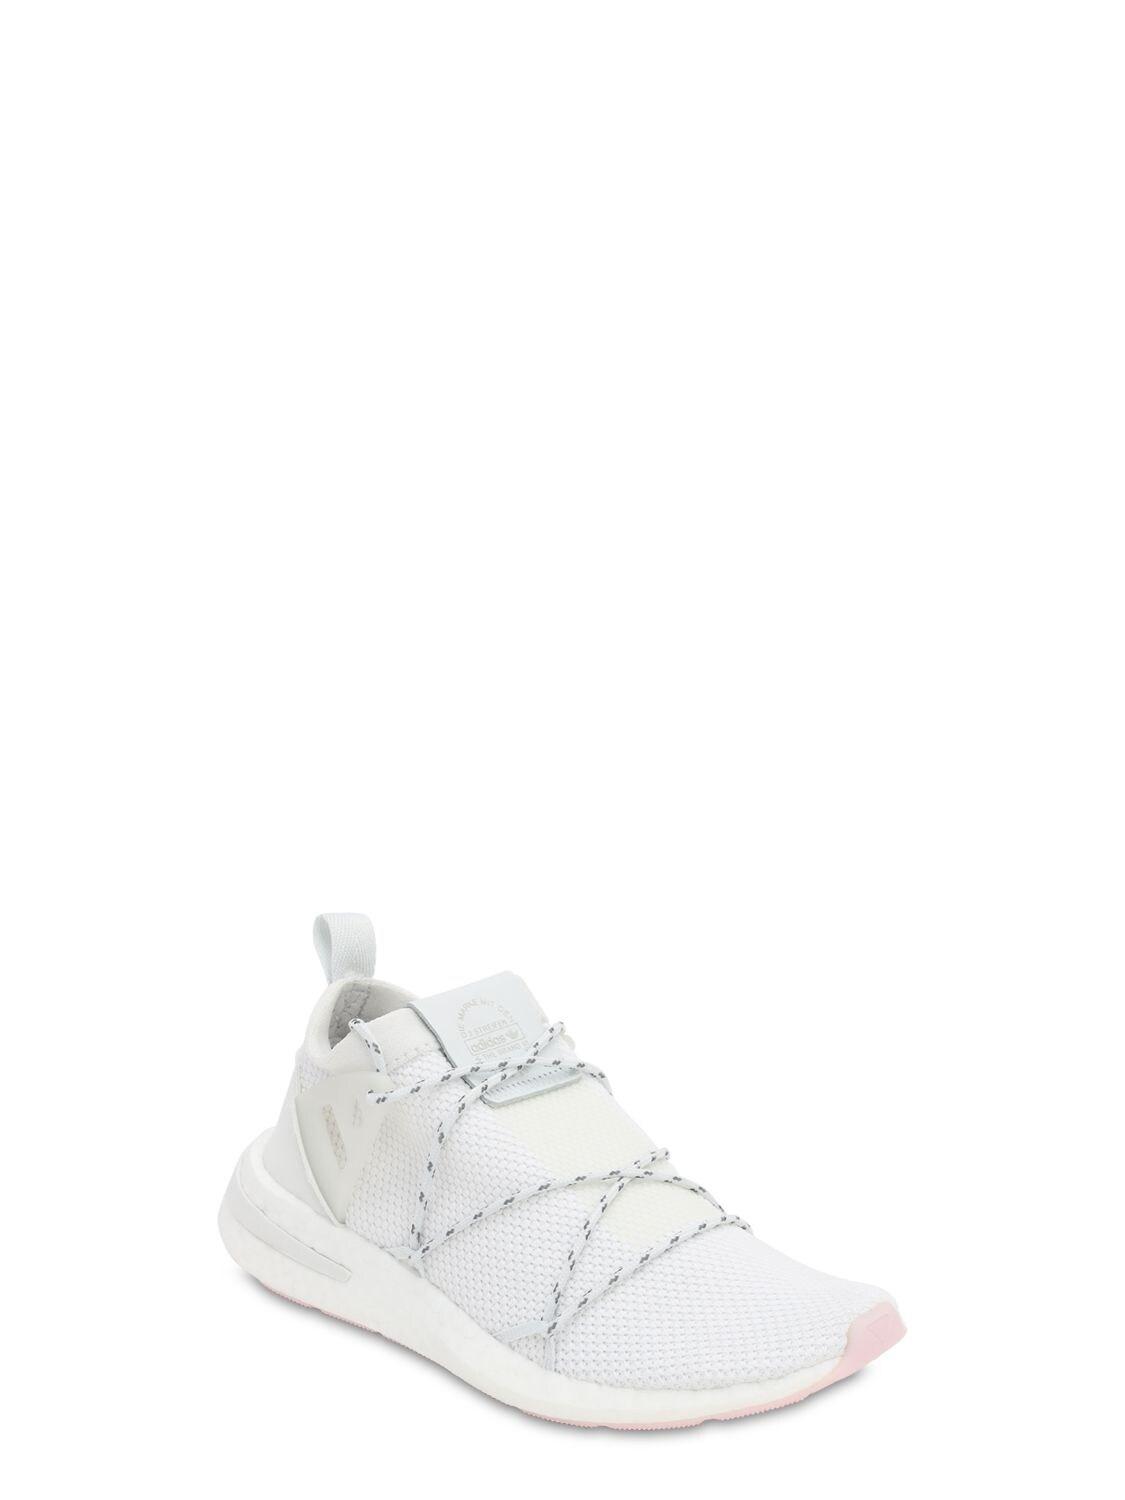 adidas Originals Arkyn Knit White Low-cut Sneaker | Lyst Canada